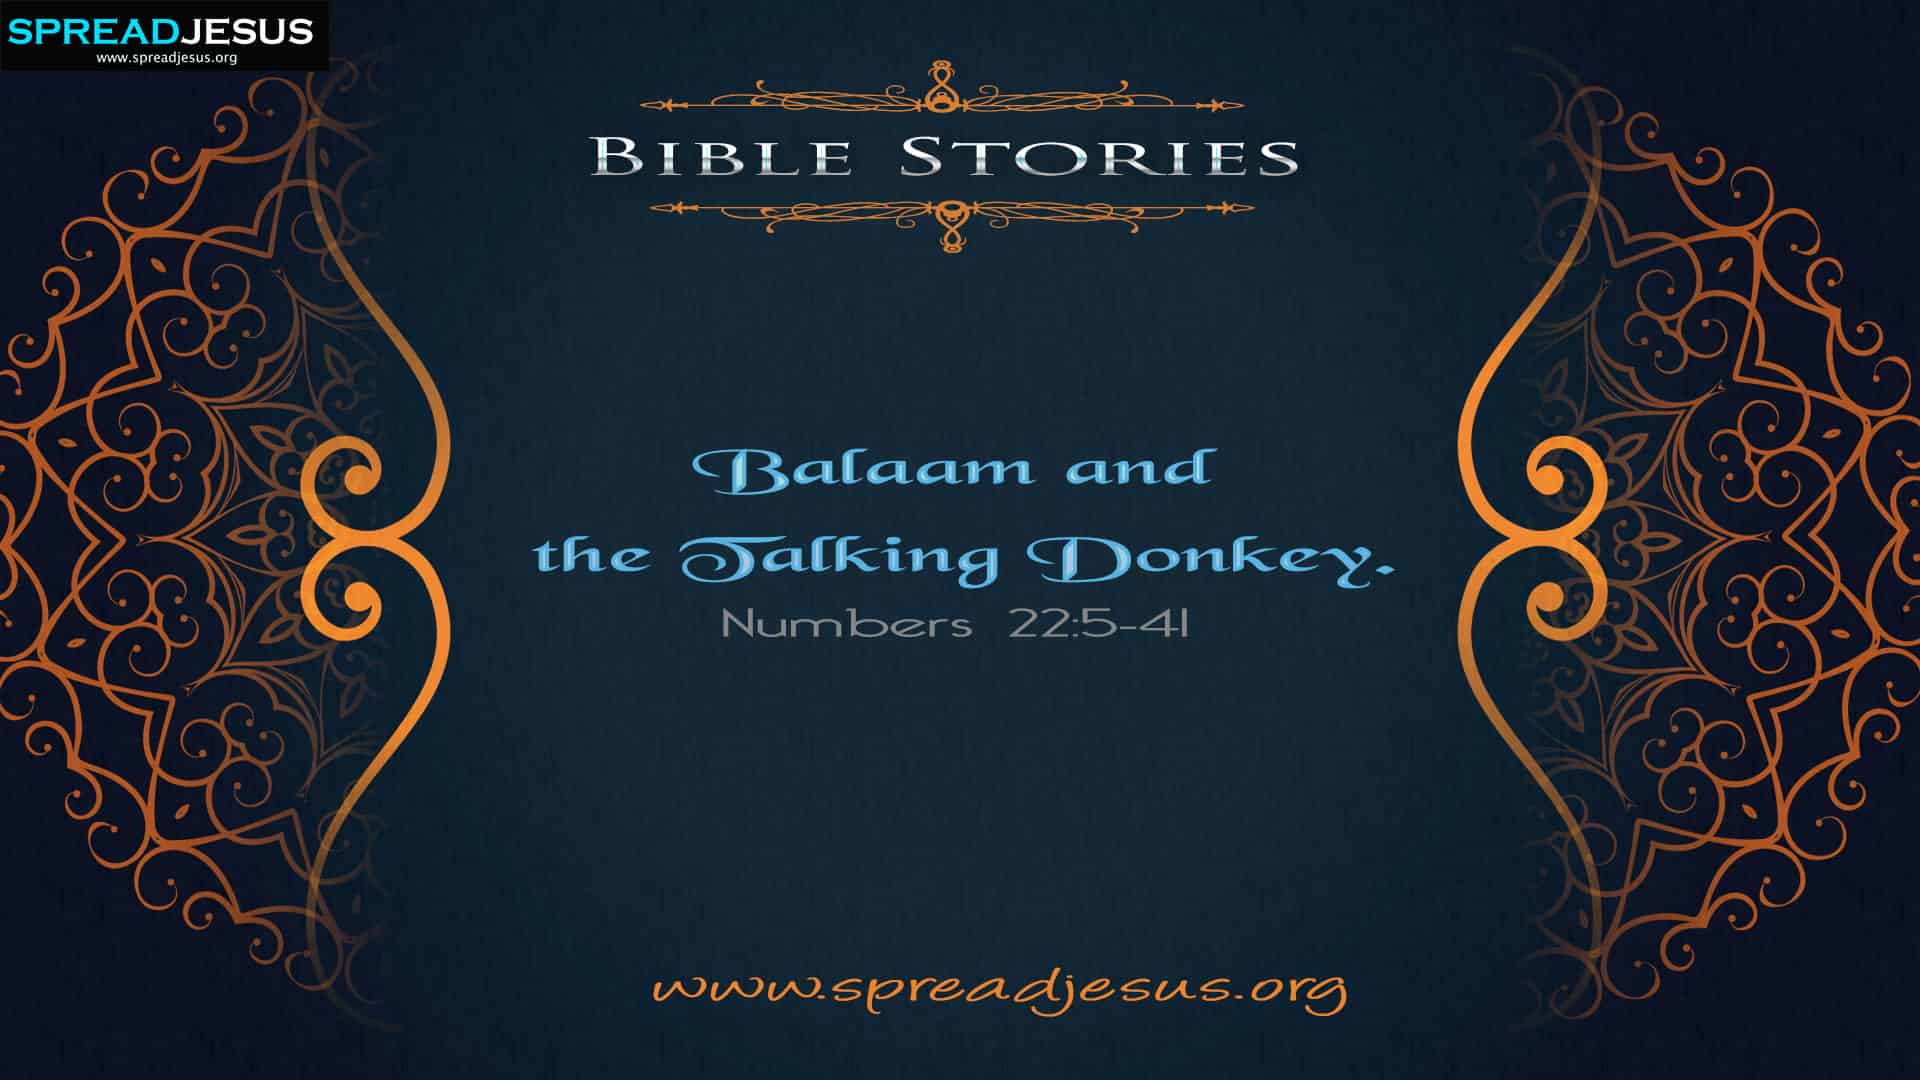 Balaam and the Talking Donkey